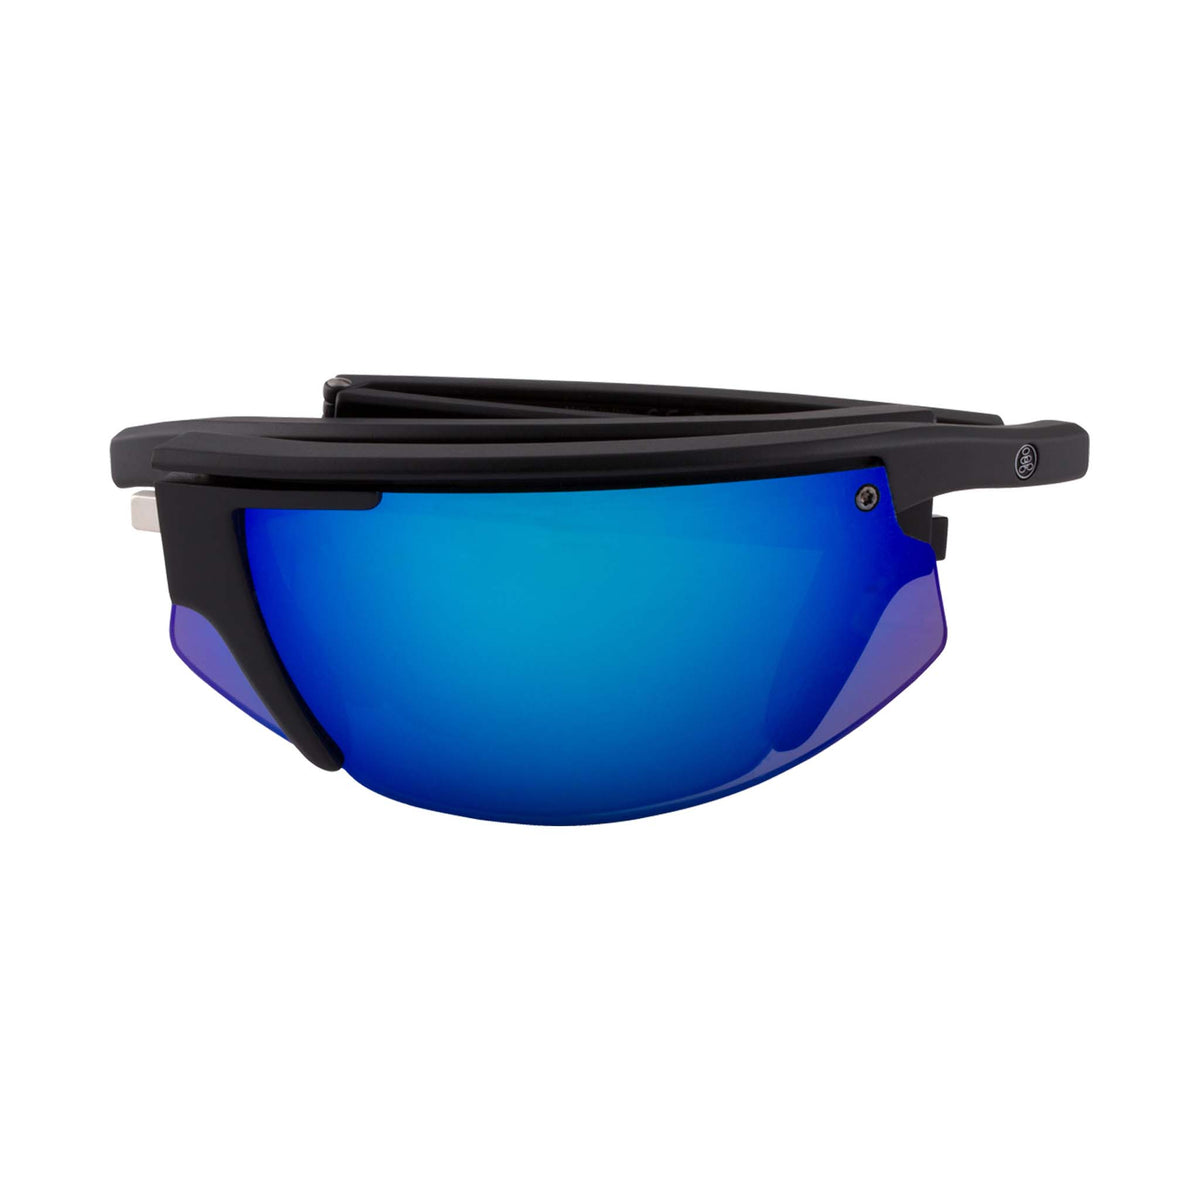 Popticals, Premium Compact Sunglasses, PopStar, 010040-BMUN, Polarized Sunglasses, Matte Black Frame, Gray Lenses w/Blue Mirror Finish, Compact View